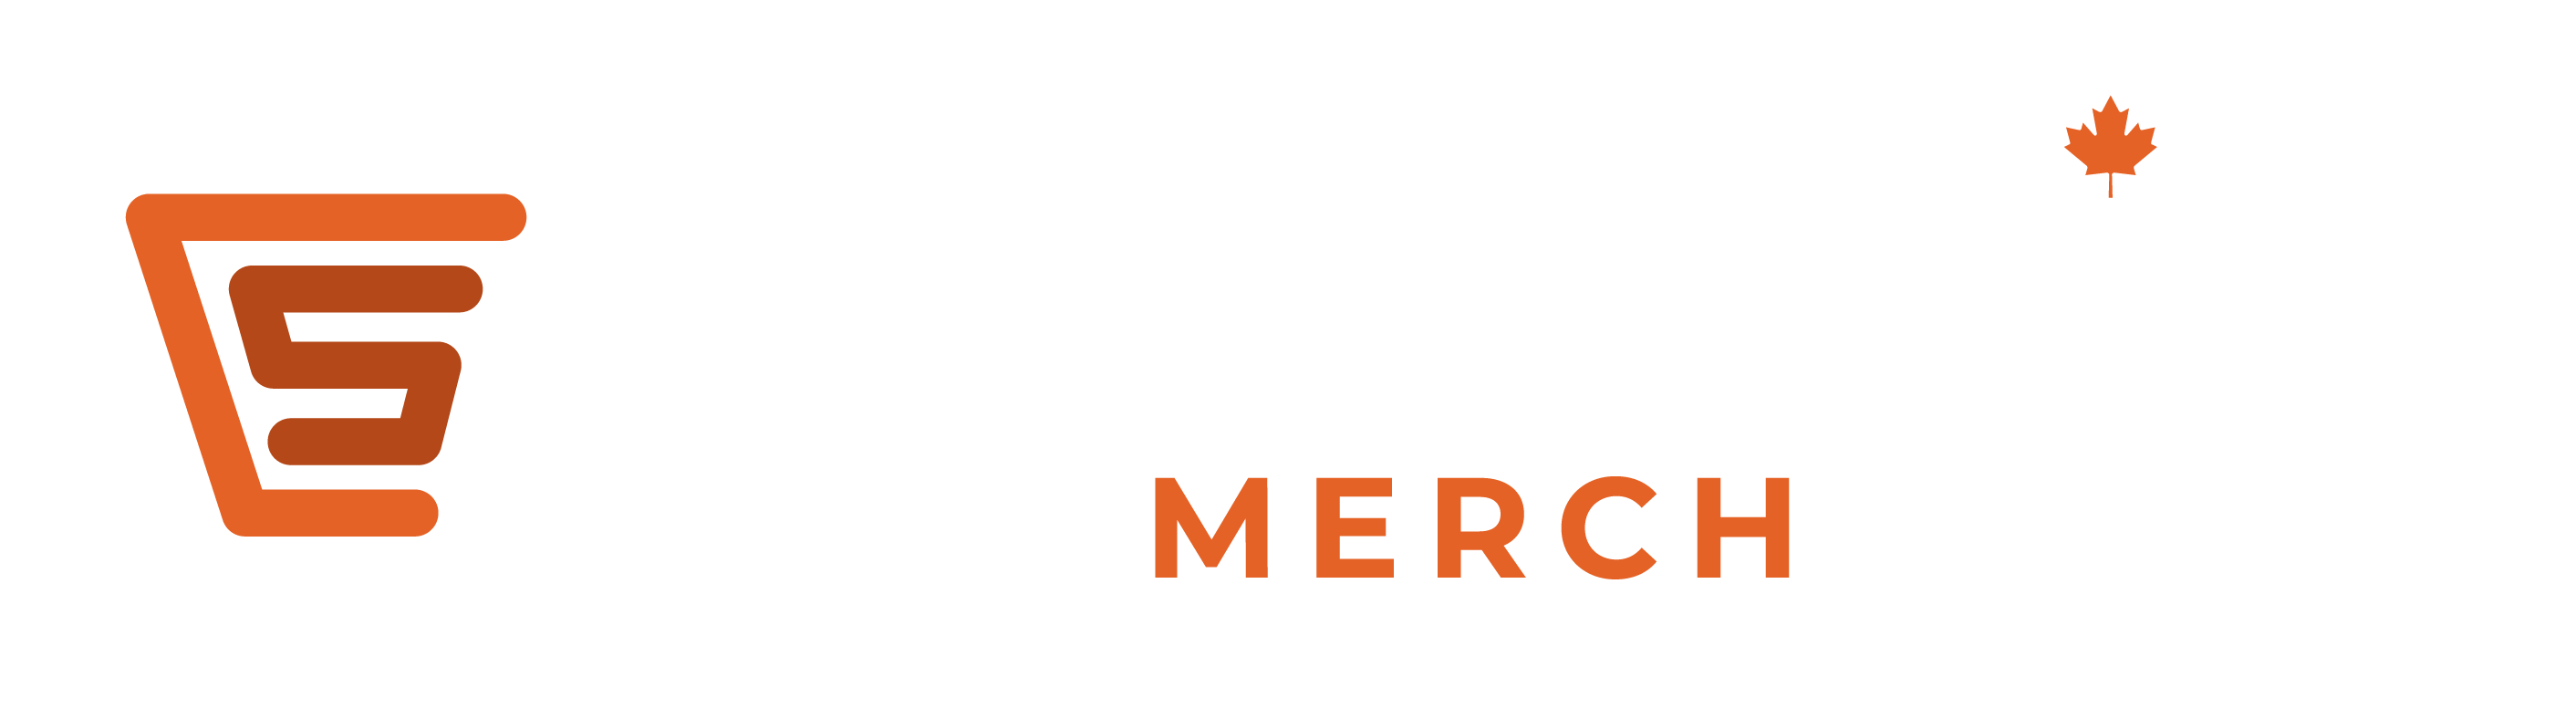 Shelby's Merch